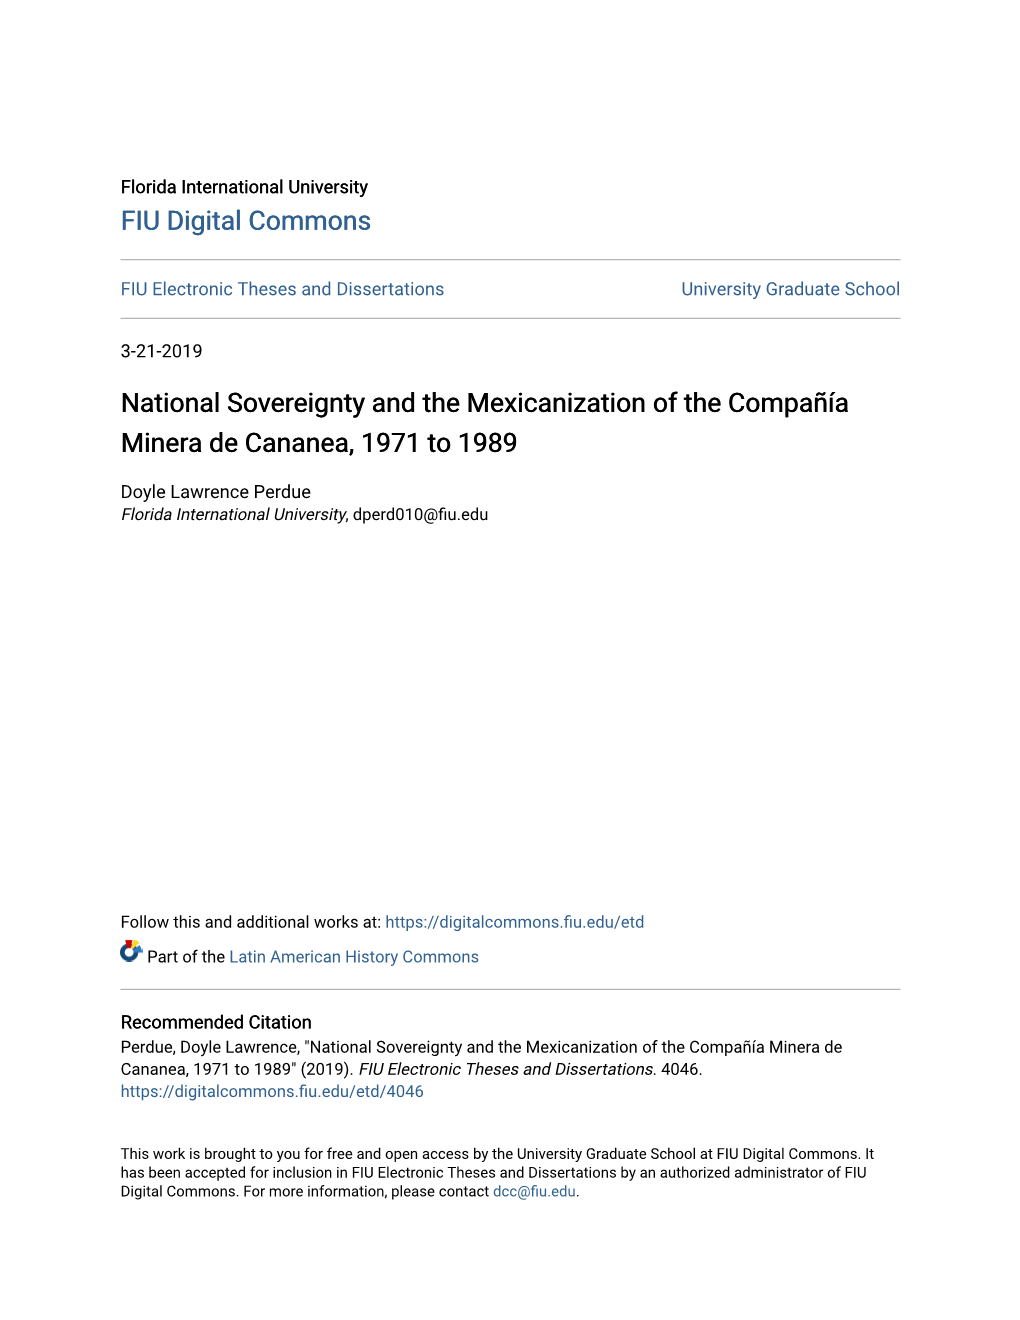 National Sovereignty and the Mexicanization of the Compañía Minera De Cananea, 1971 to 1989